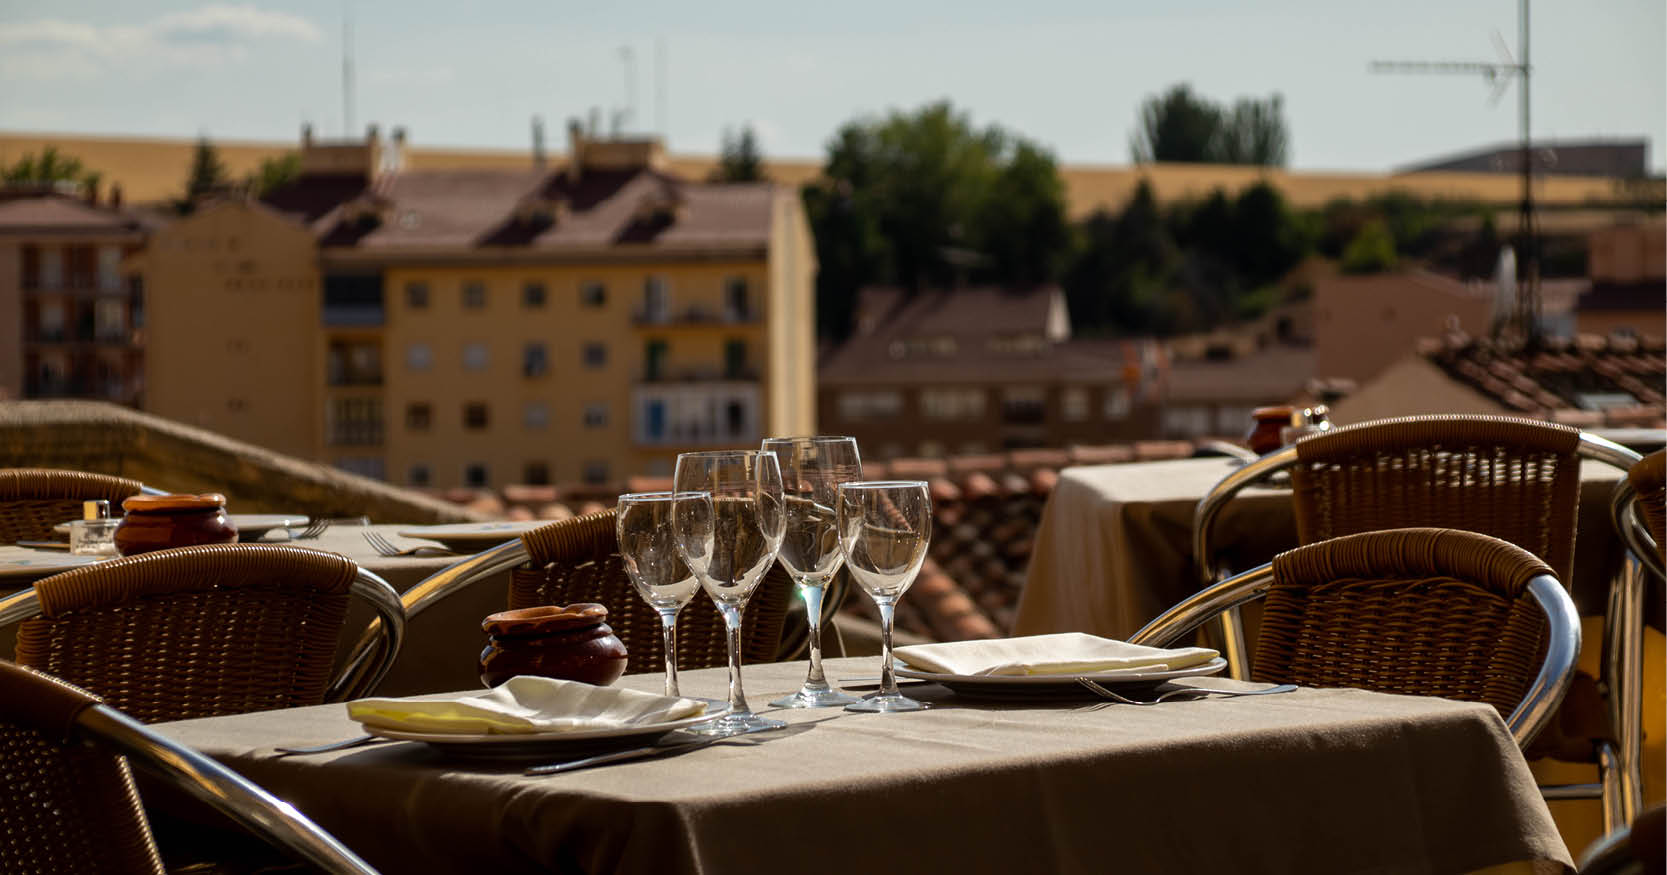 Restaurant at Casa de los Picos and the Canaleja Viewpoint in Segovia